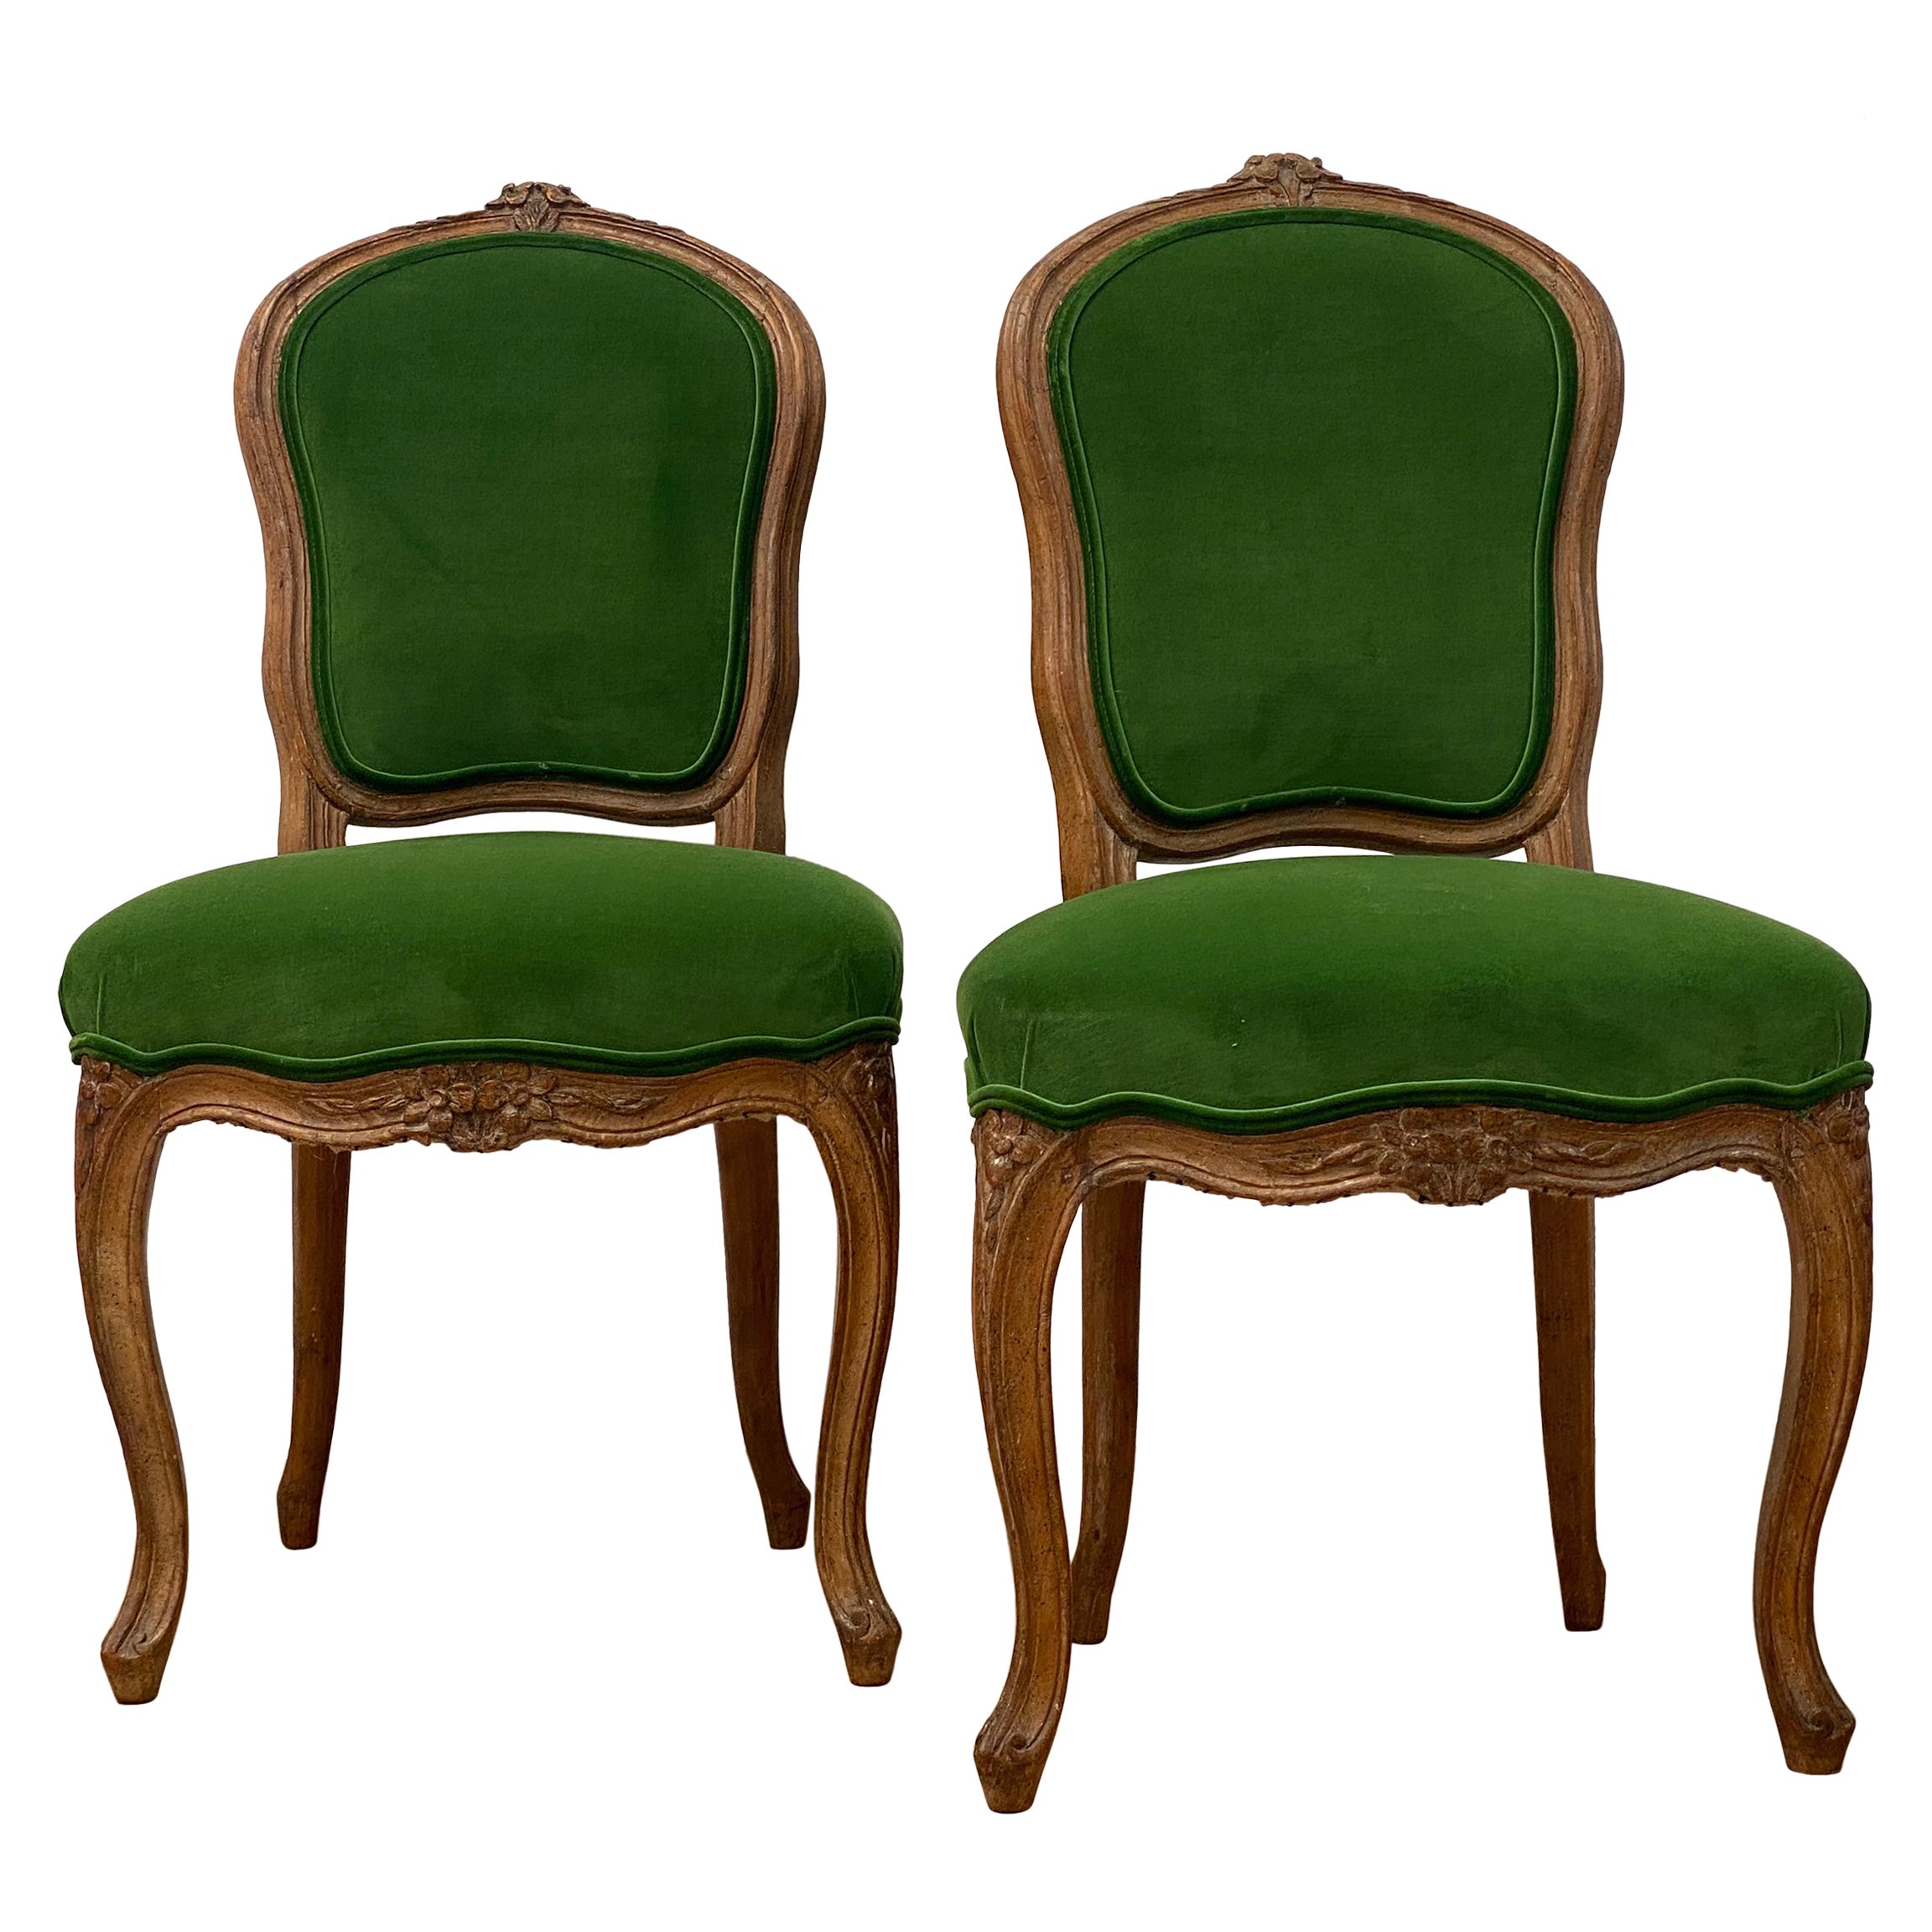  A pair of Antique Louis XVI Chairs